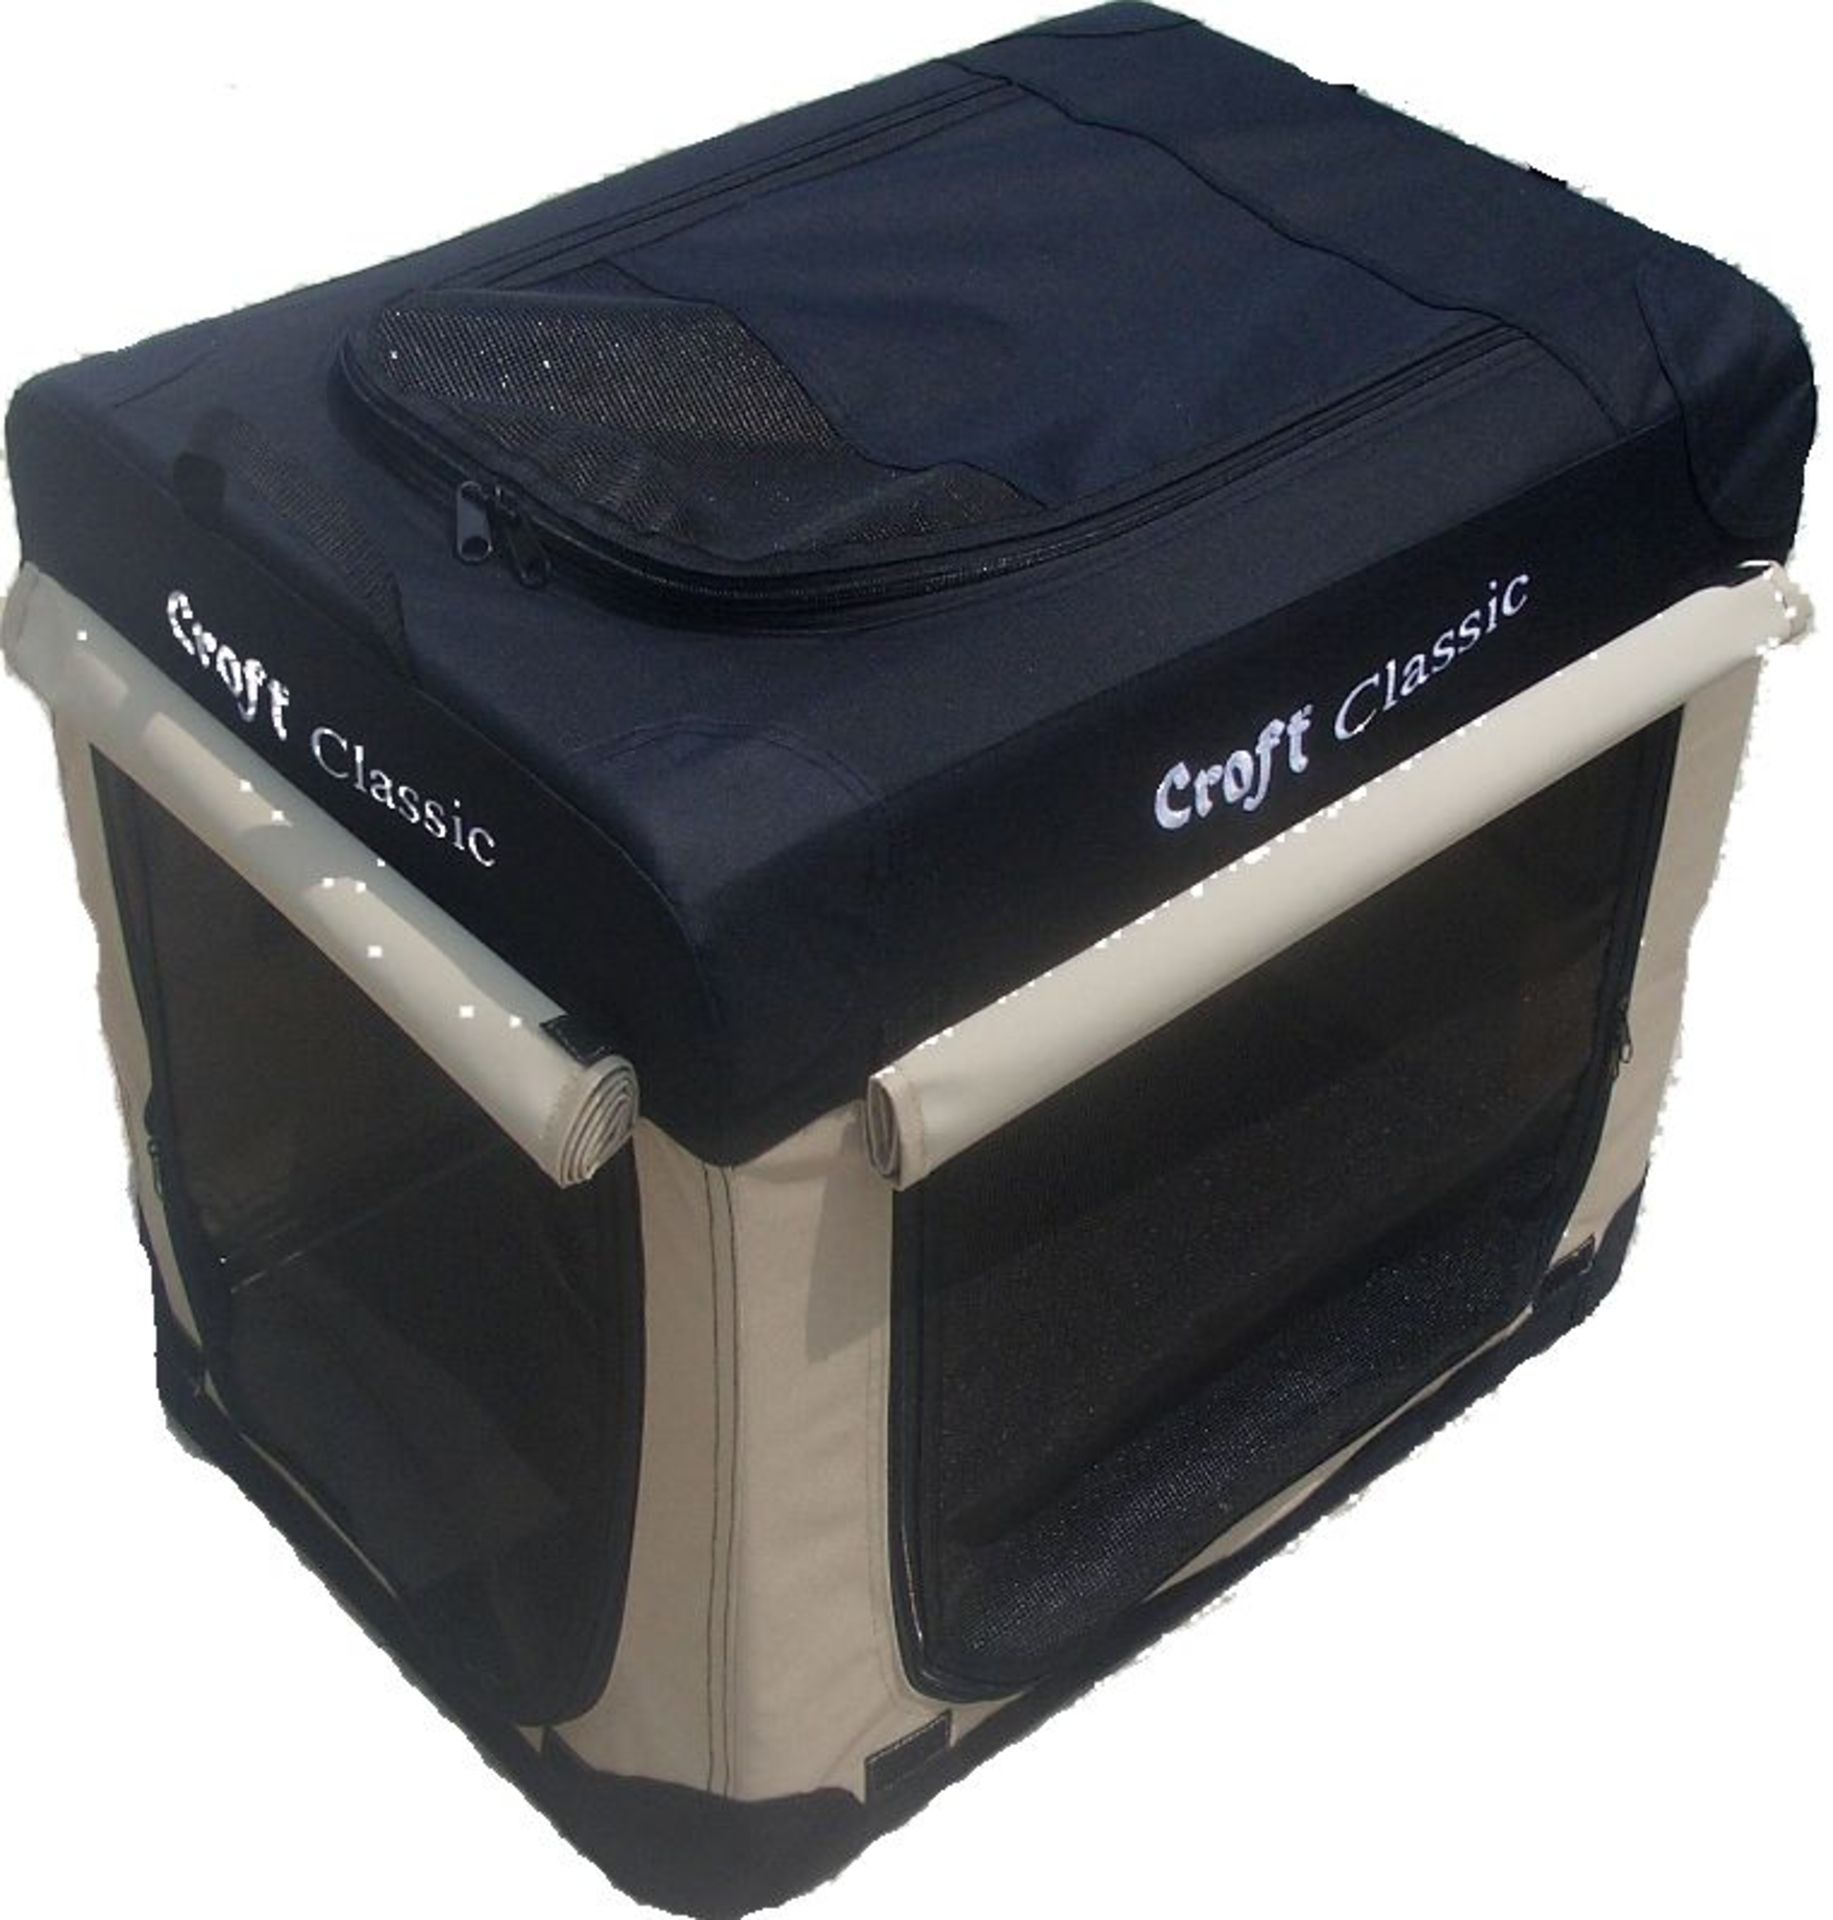 63 x Classic Soft Crate 24". Total RRP £3,276